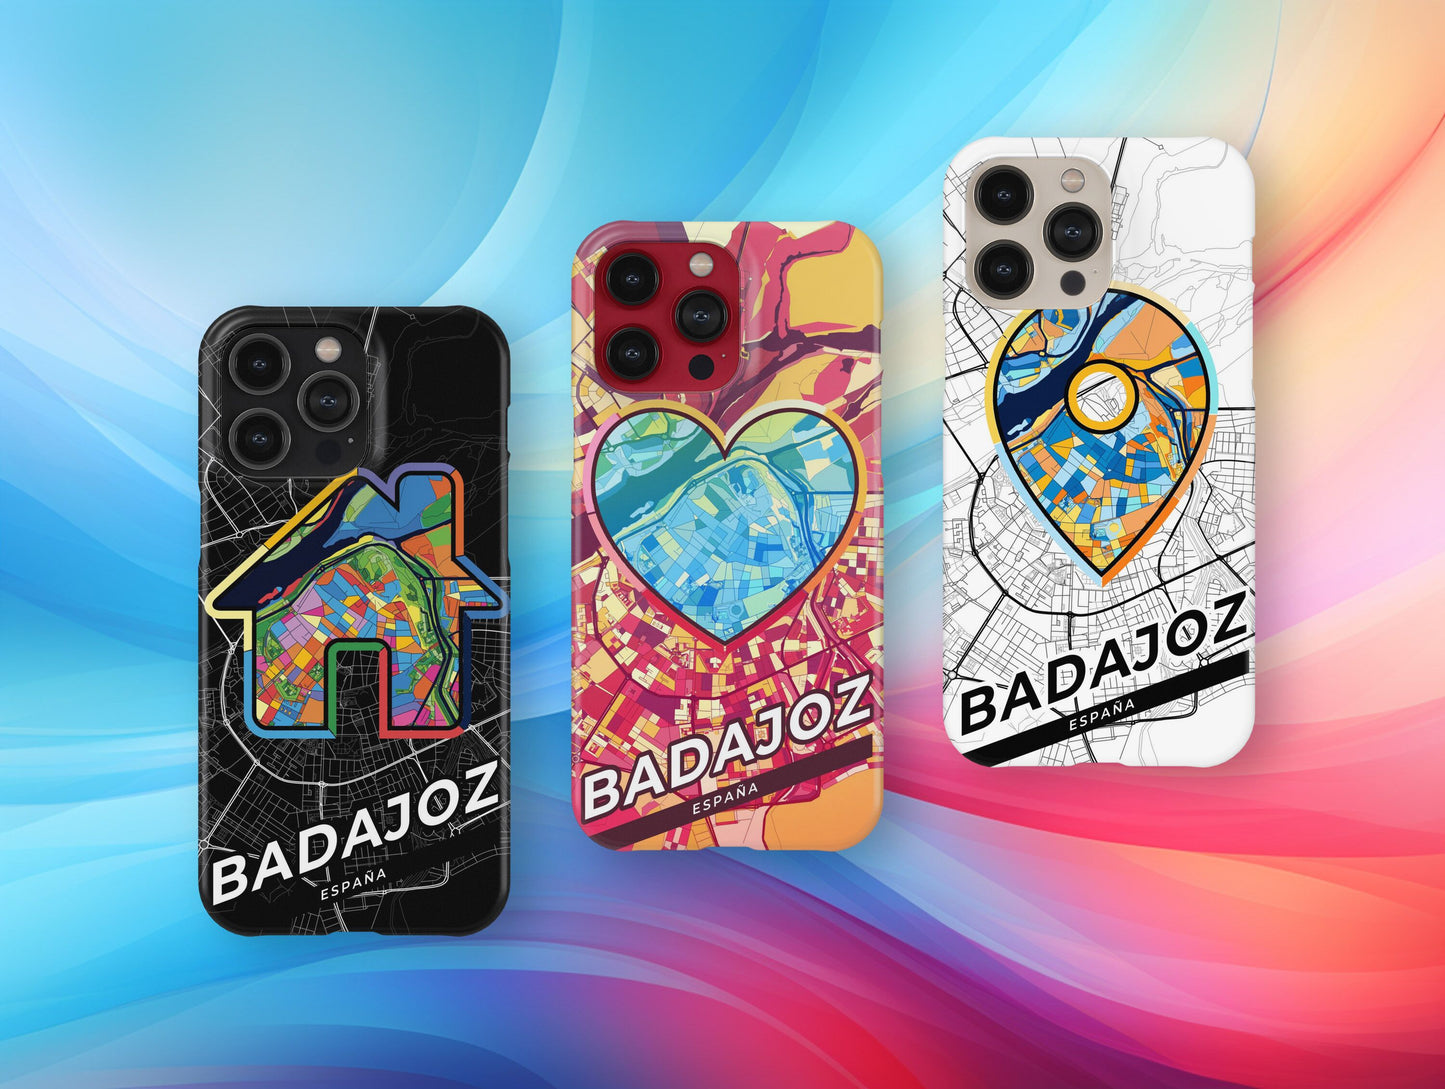 Badajoz Spain slim phone case with colorful icon. Birthday, wedding or housewarming gift. Couple match cases.